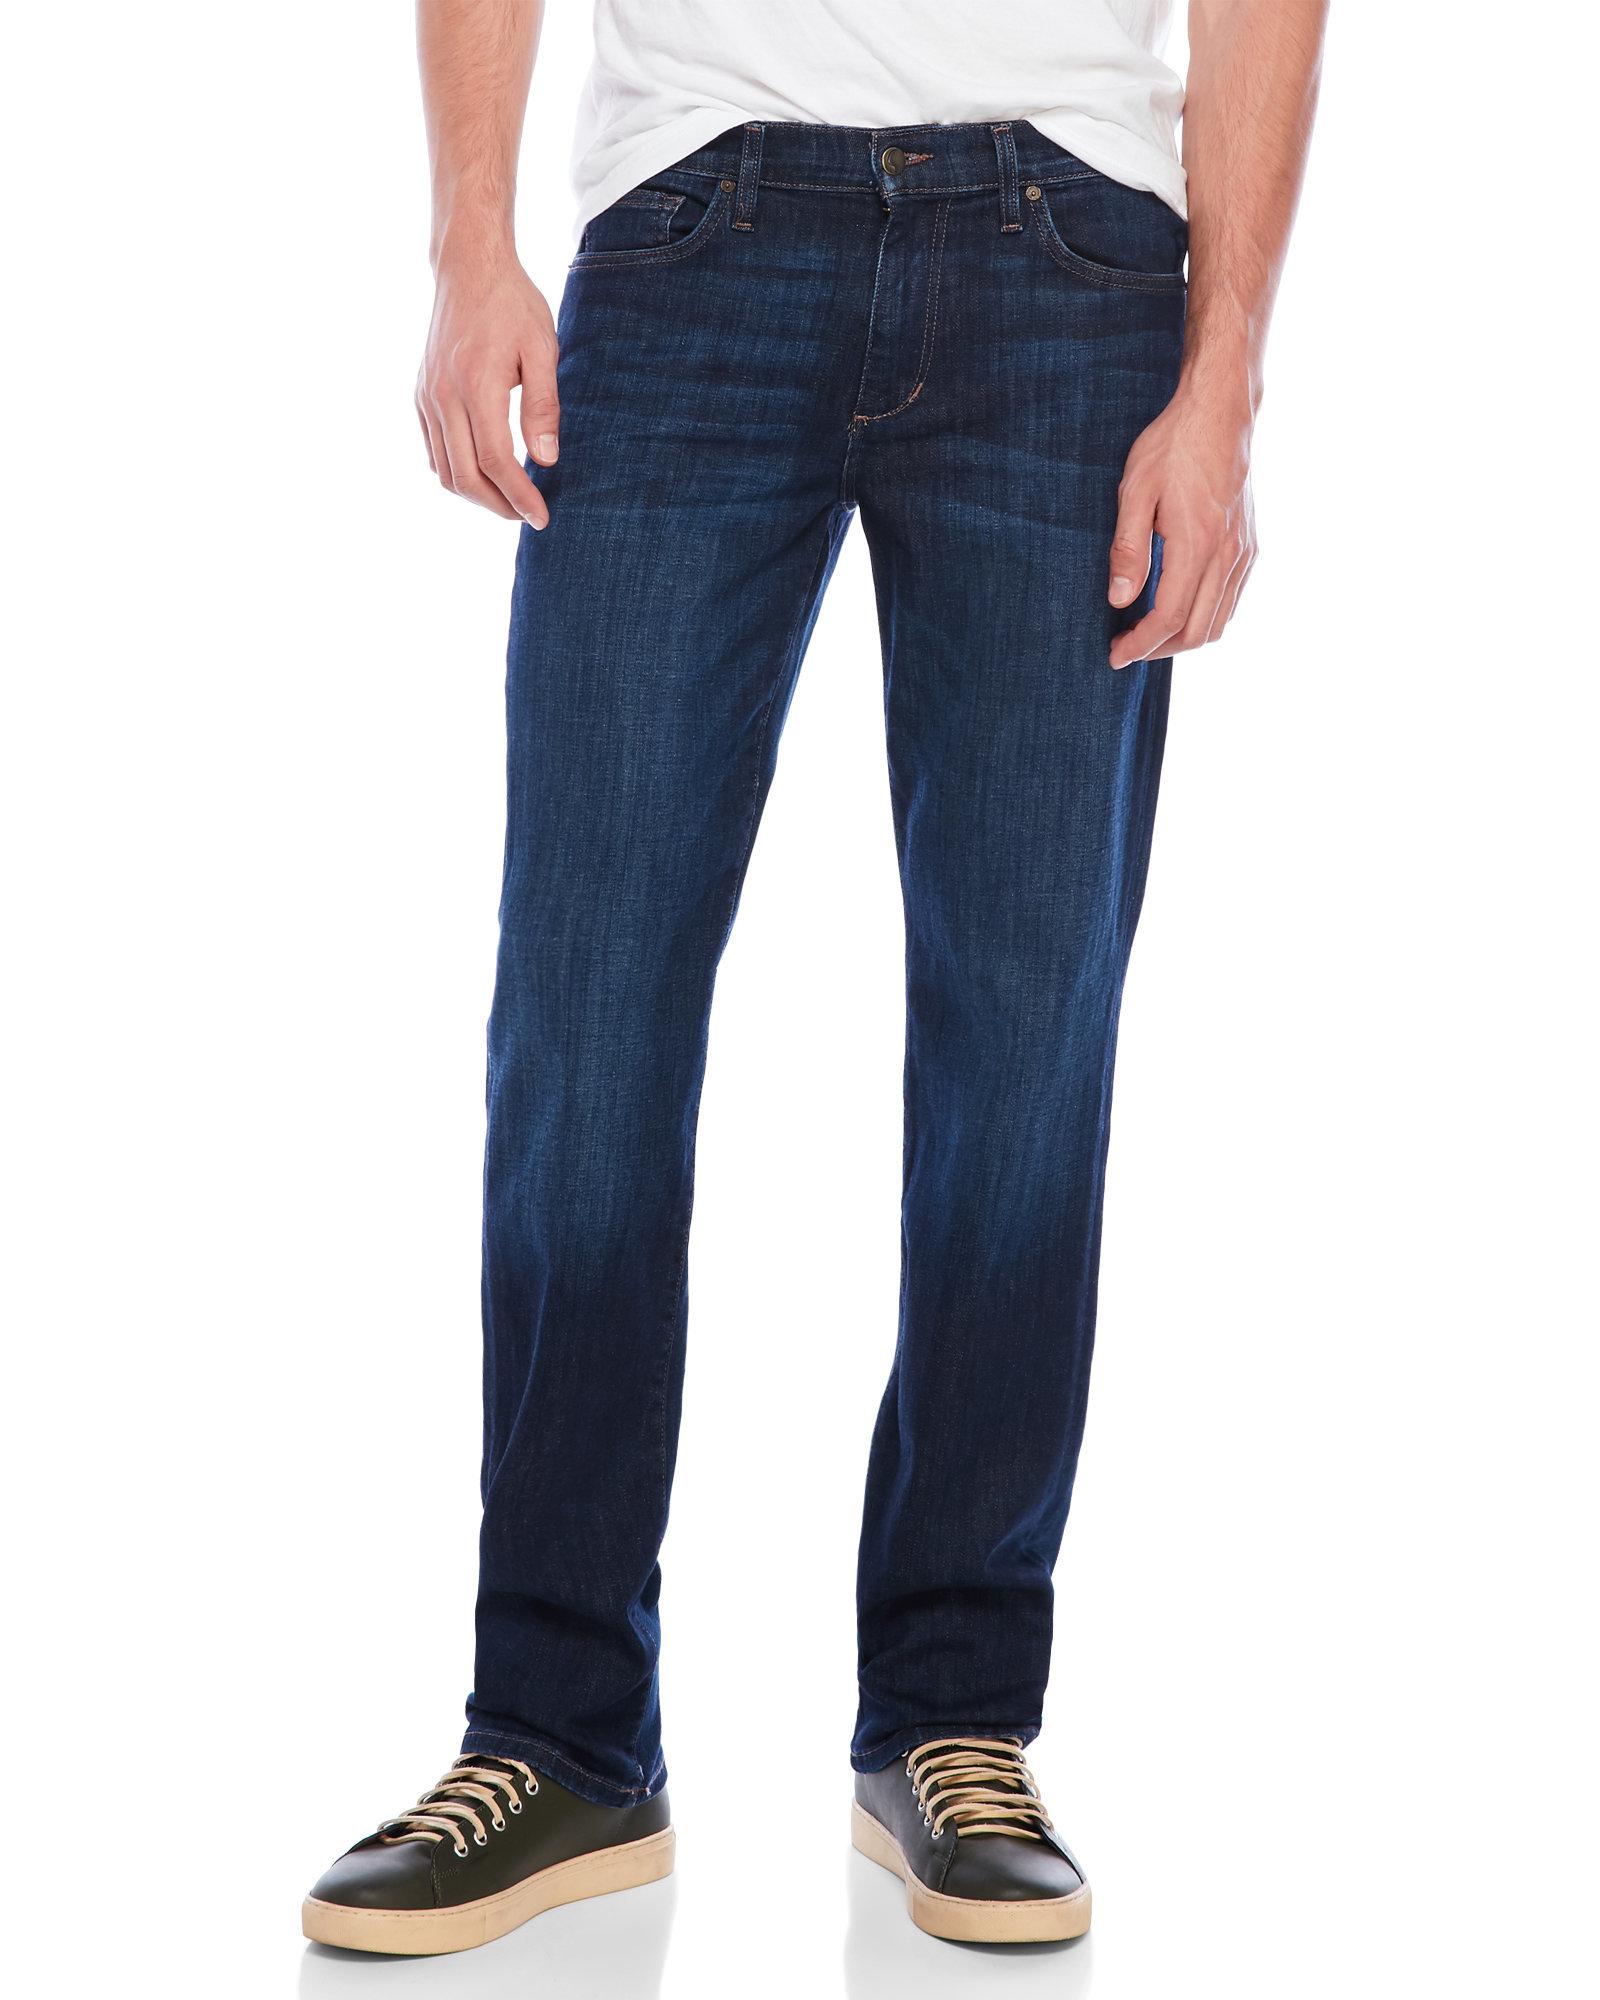 Joe's Jeans Denim The Classic Fit Jeans in Blue for Men - Lyst